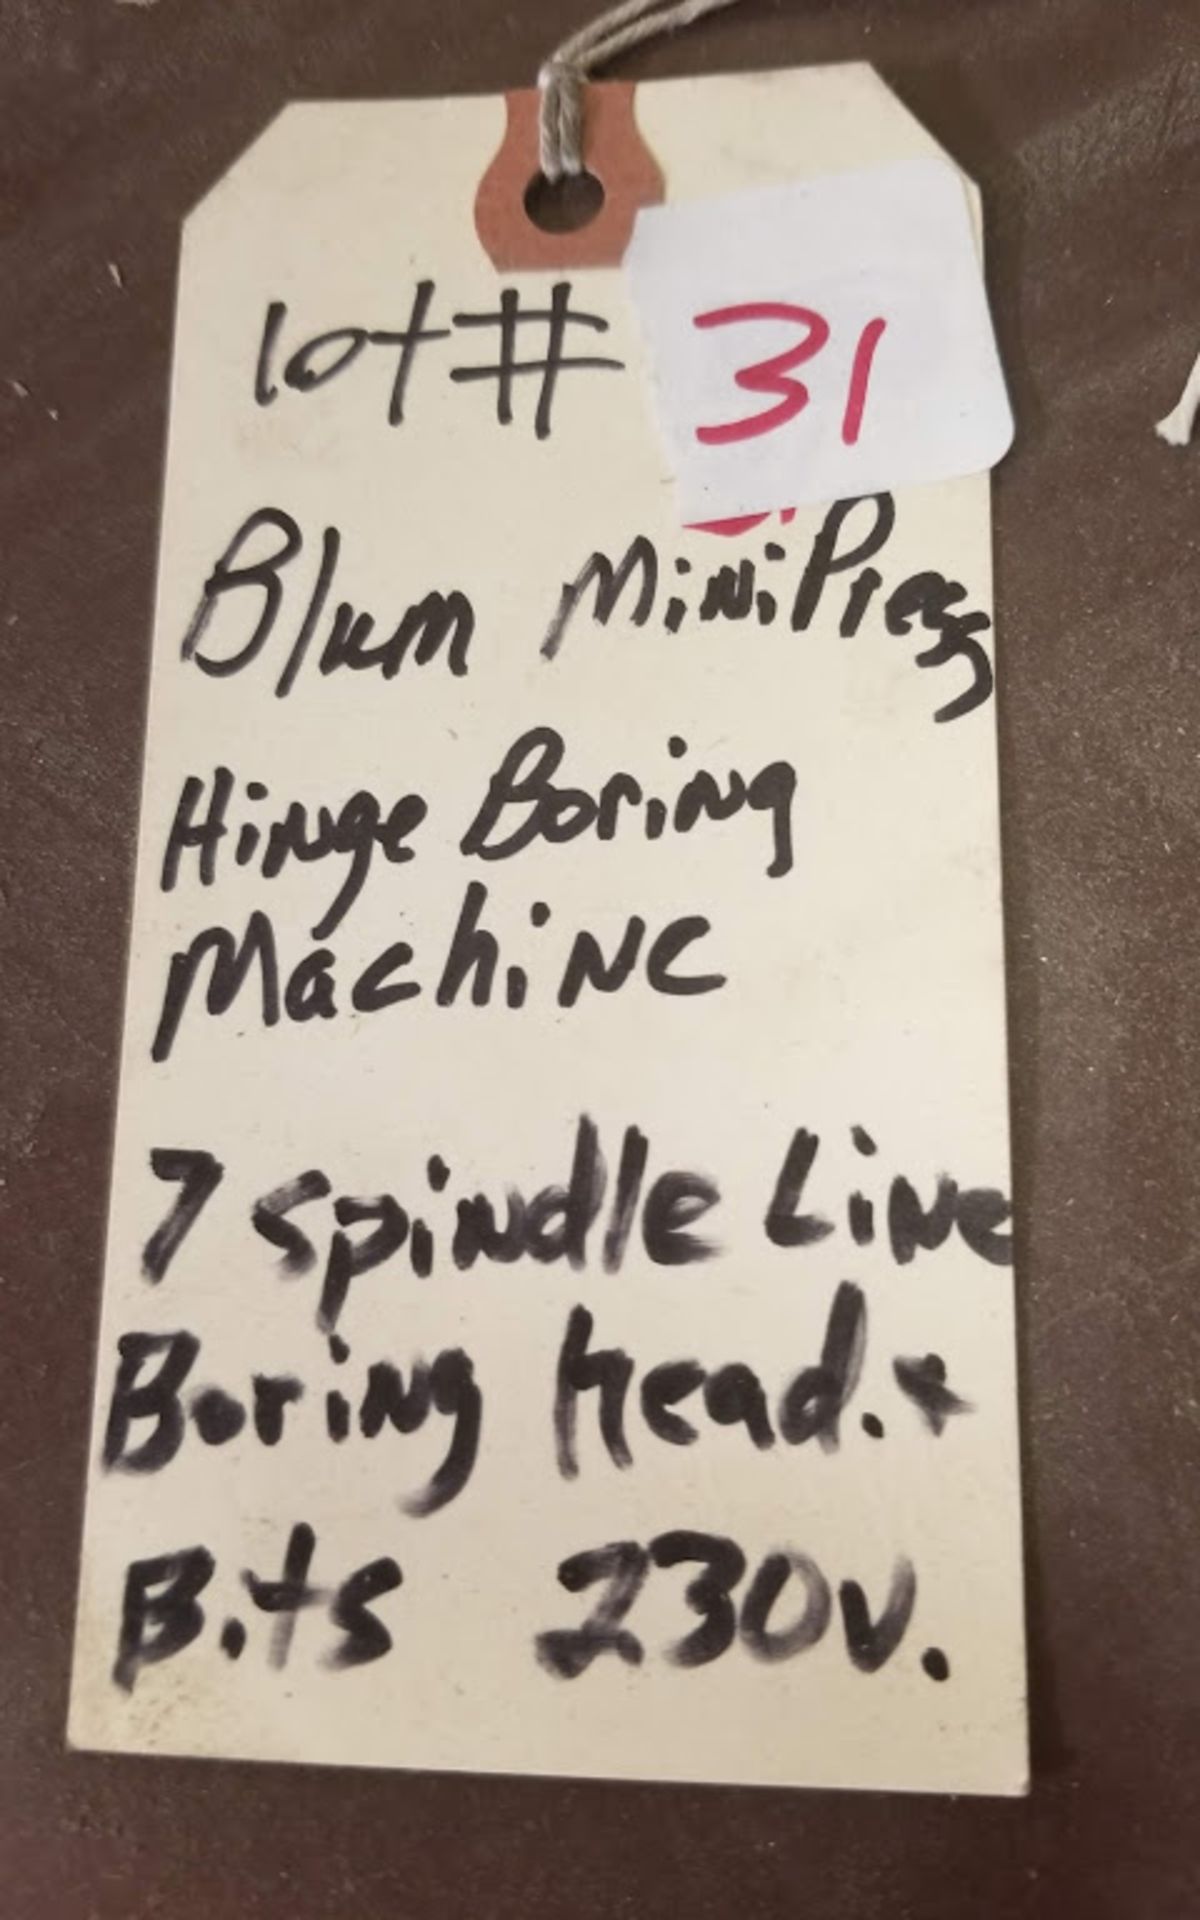 Blum MiniPress Hinge Boring Machine, 7 Spindle Line Boring Head + Bits, 230 Volts - Image 4 of 4